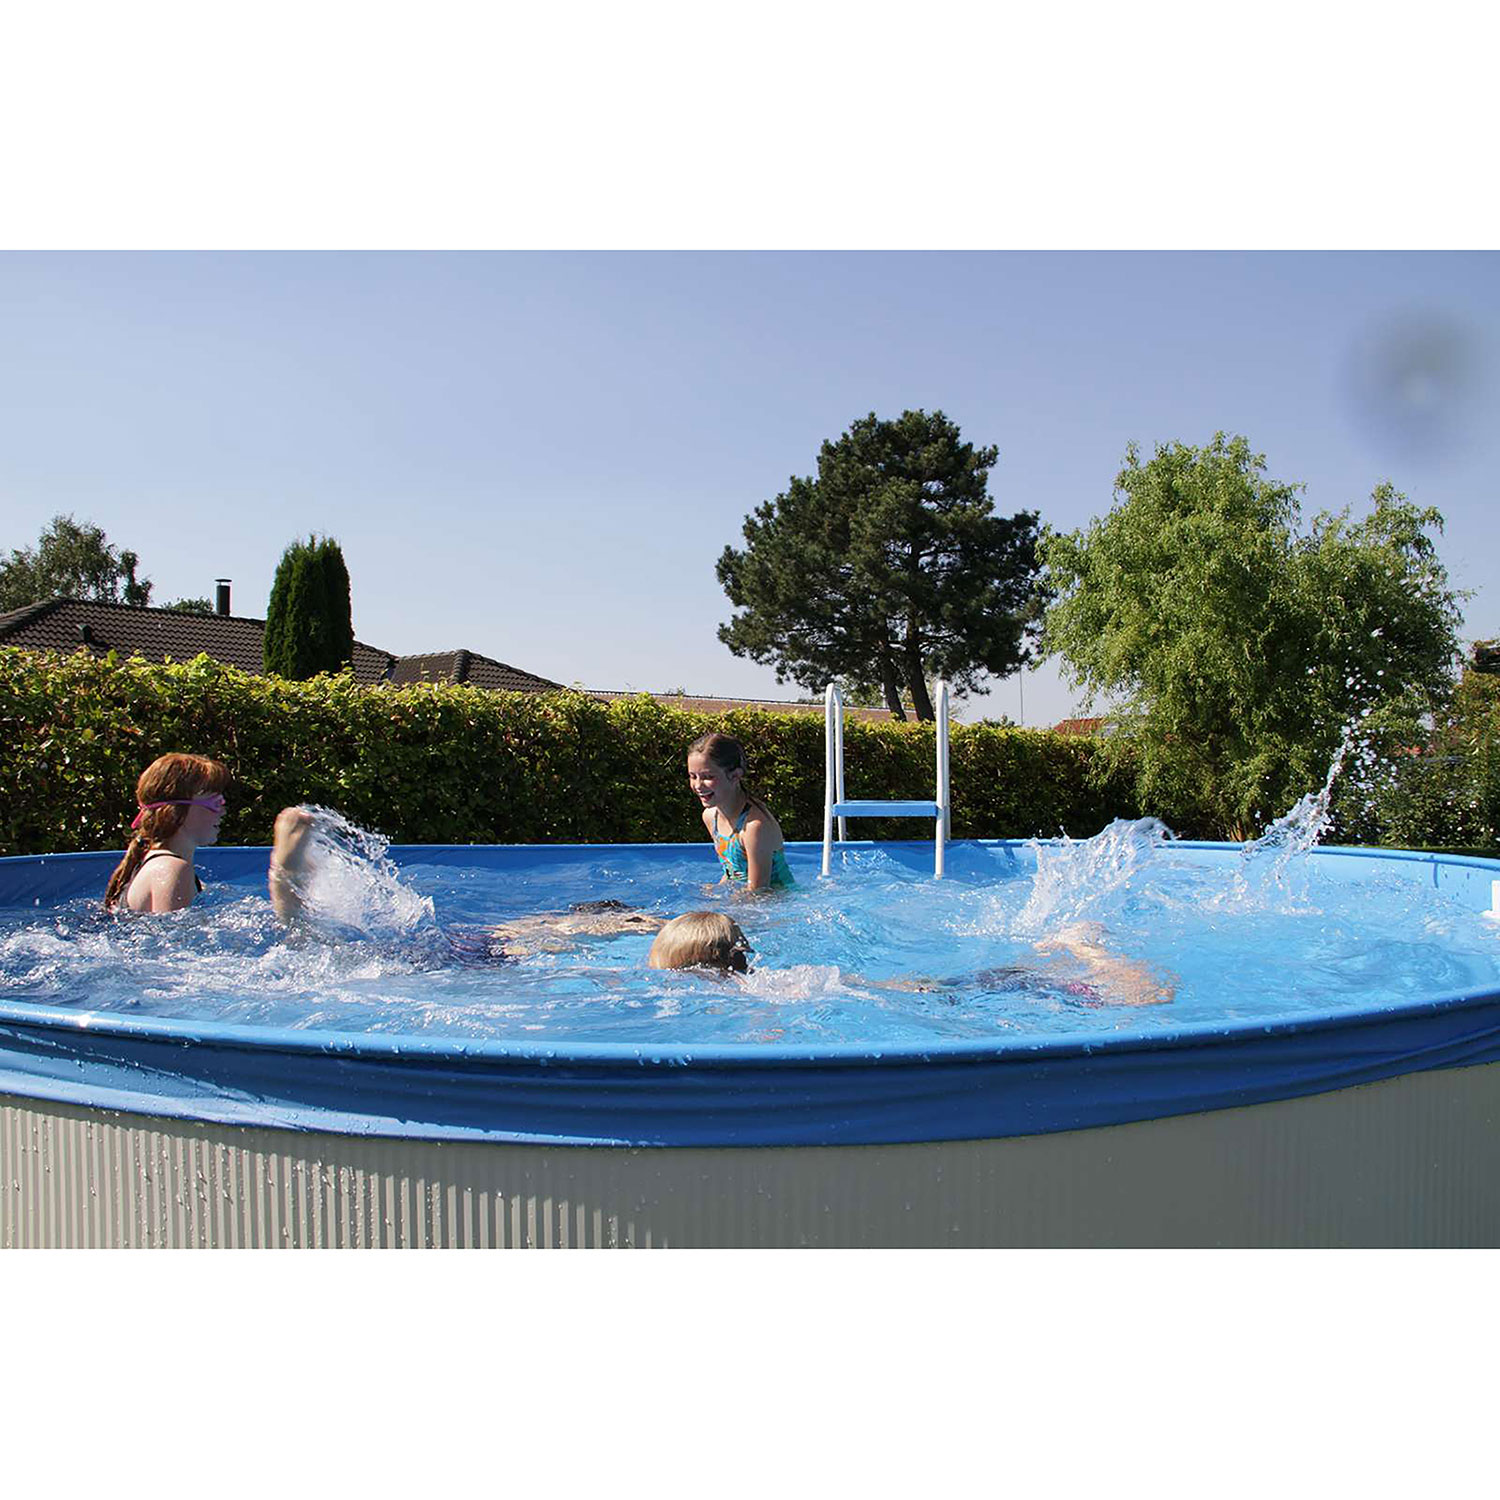 Pool Kreta family Swim & Fun – Höjd: 90 cm ink. skimmerpump & säkerhetsstege